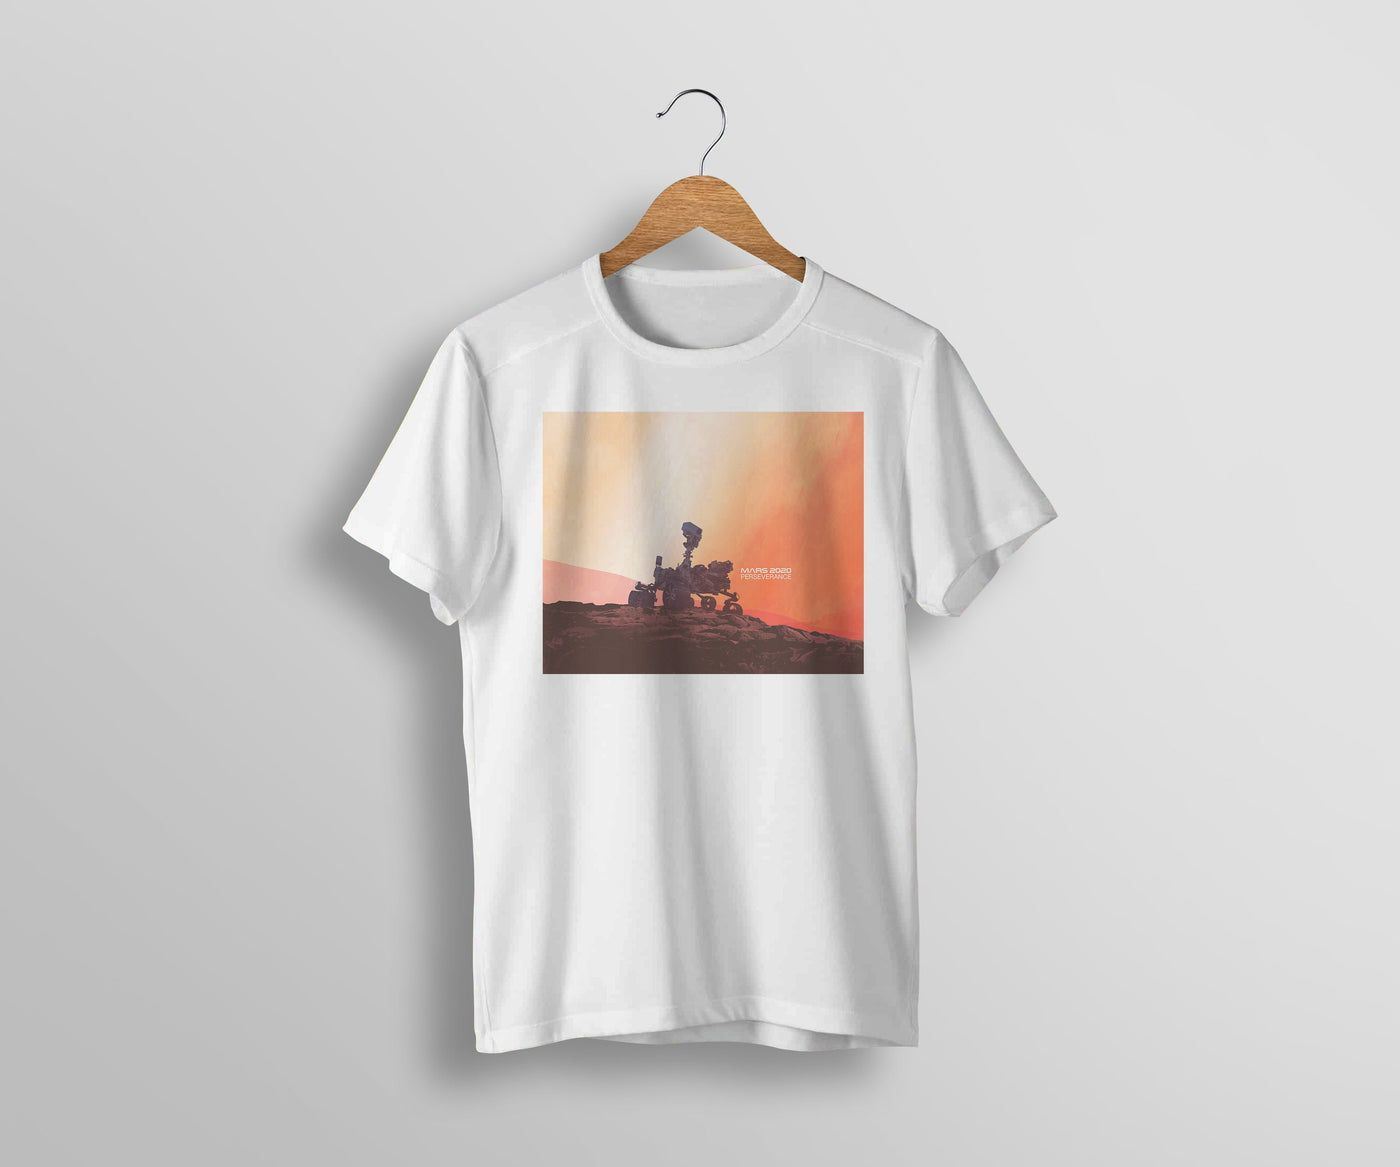 Camiseta Mars 2020 Perseverance